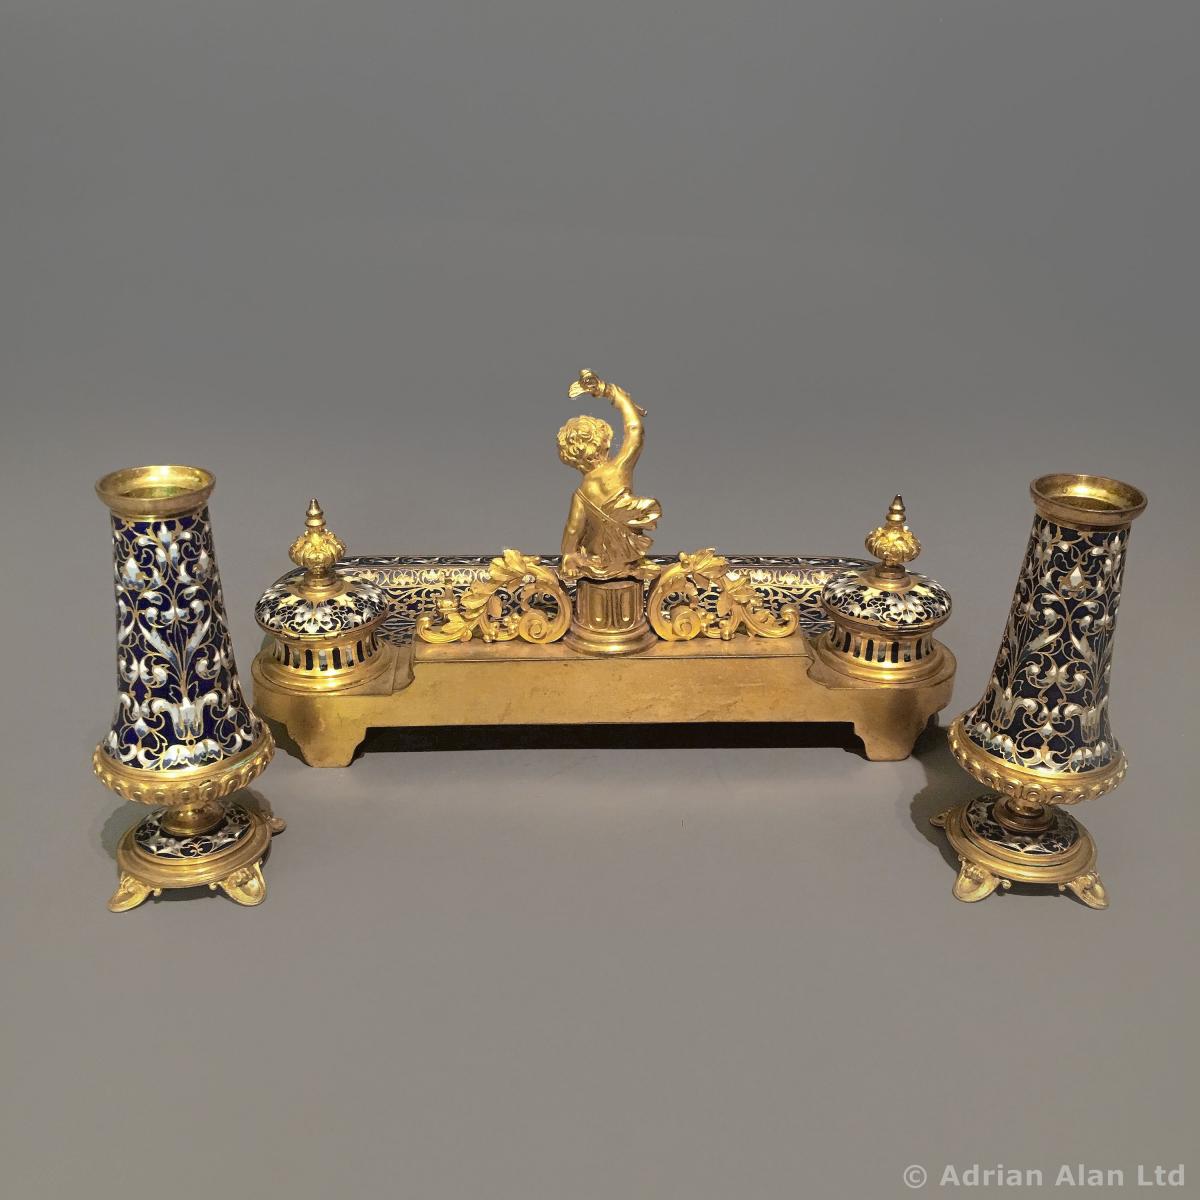 A Champlevé Enamel Desk Set by Barbedienne